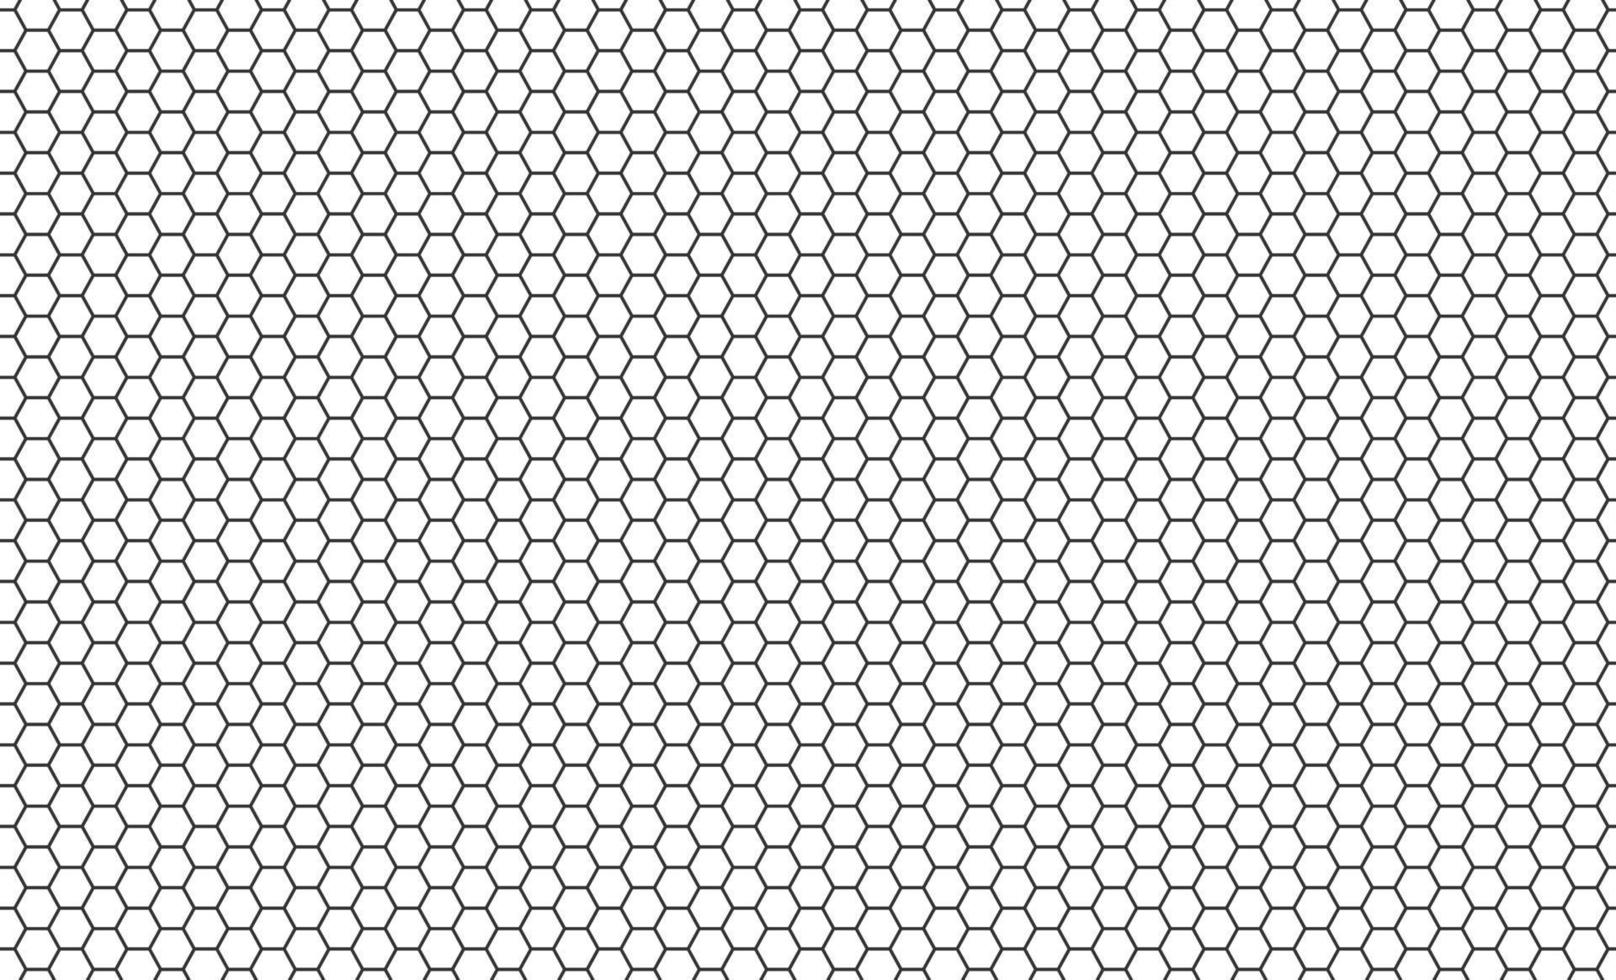 Hexagon honeycomb seamless pattern. Honeycomb grid seamless texture. Hexagonal cell texture. Bee honey hexagon shapes. Vector illustration on white background